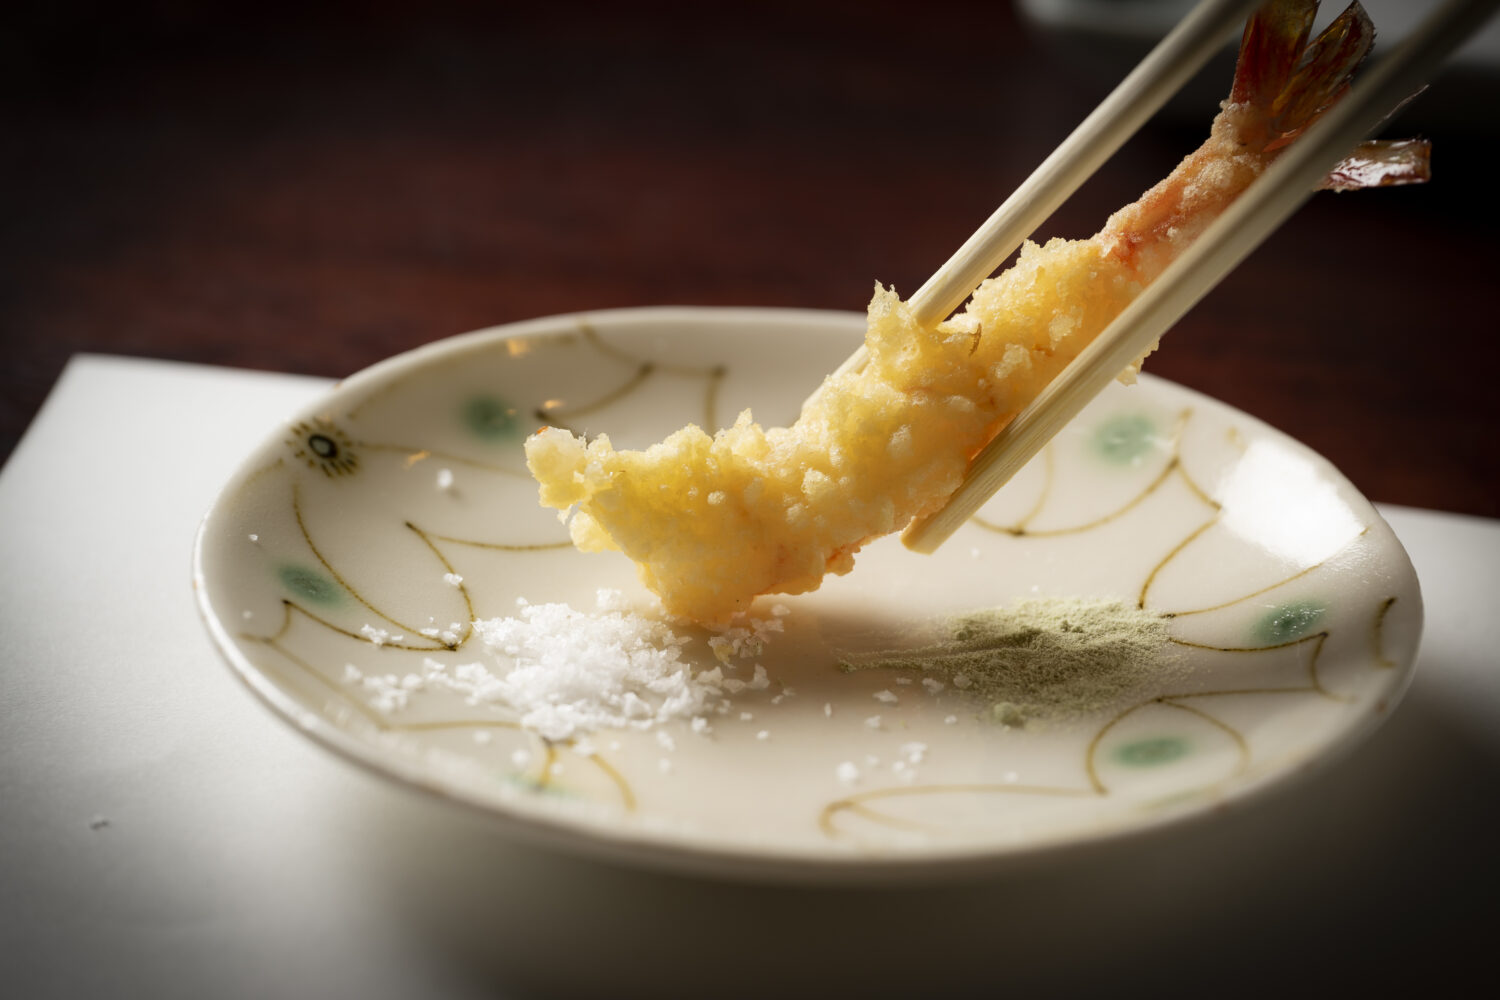 Using condiments: shio (salt), tentsuyu (tempura dipping sauce), and lemon。